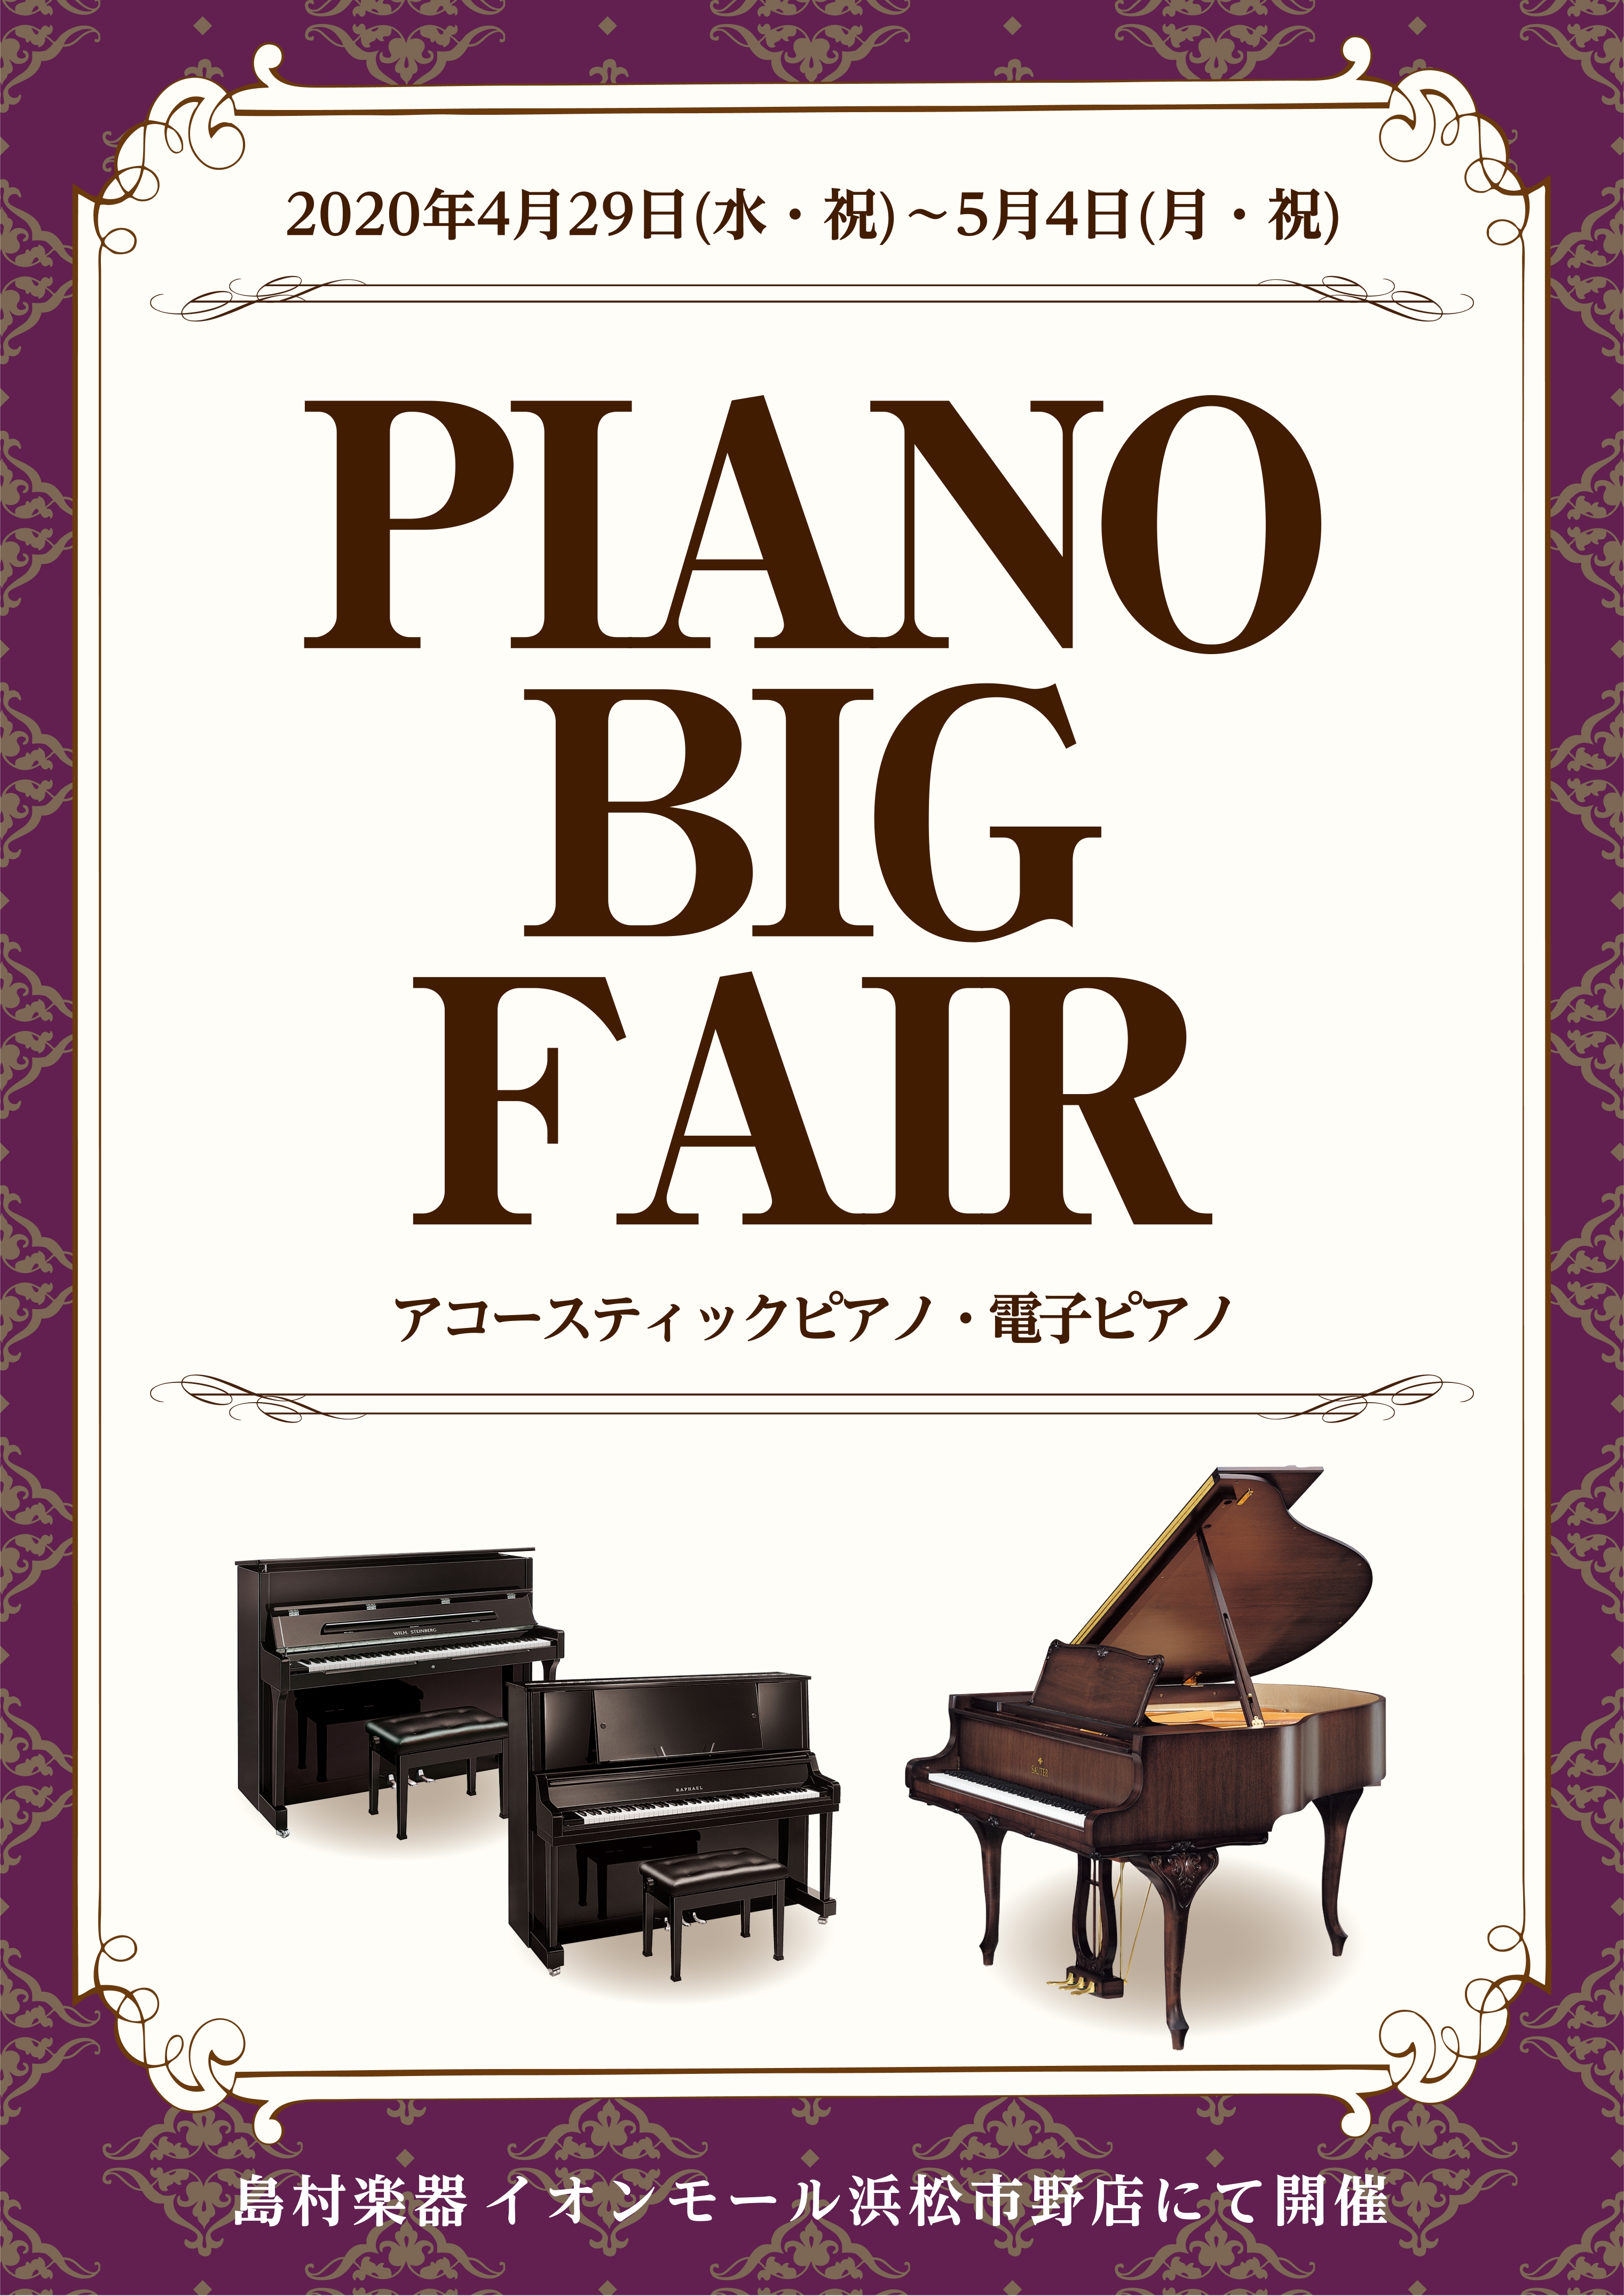 【4/29～5/4】PIANO BIG FAIR 2020 中止のお知らせ